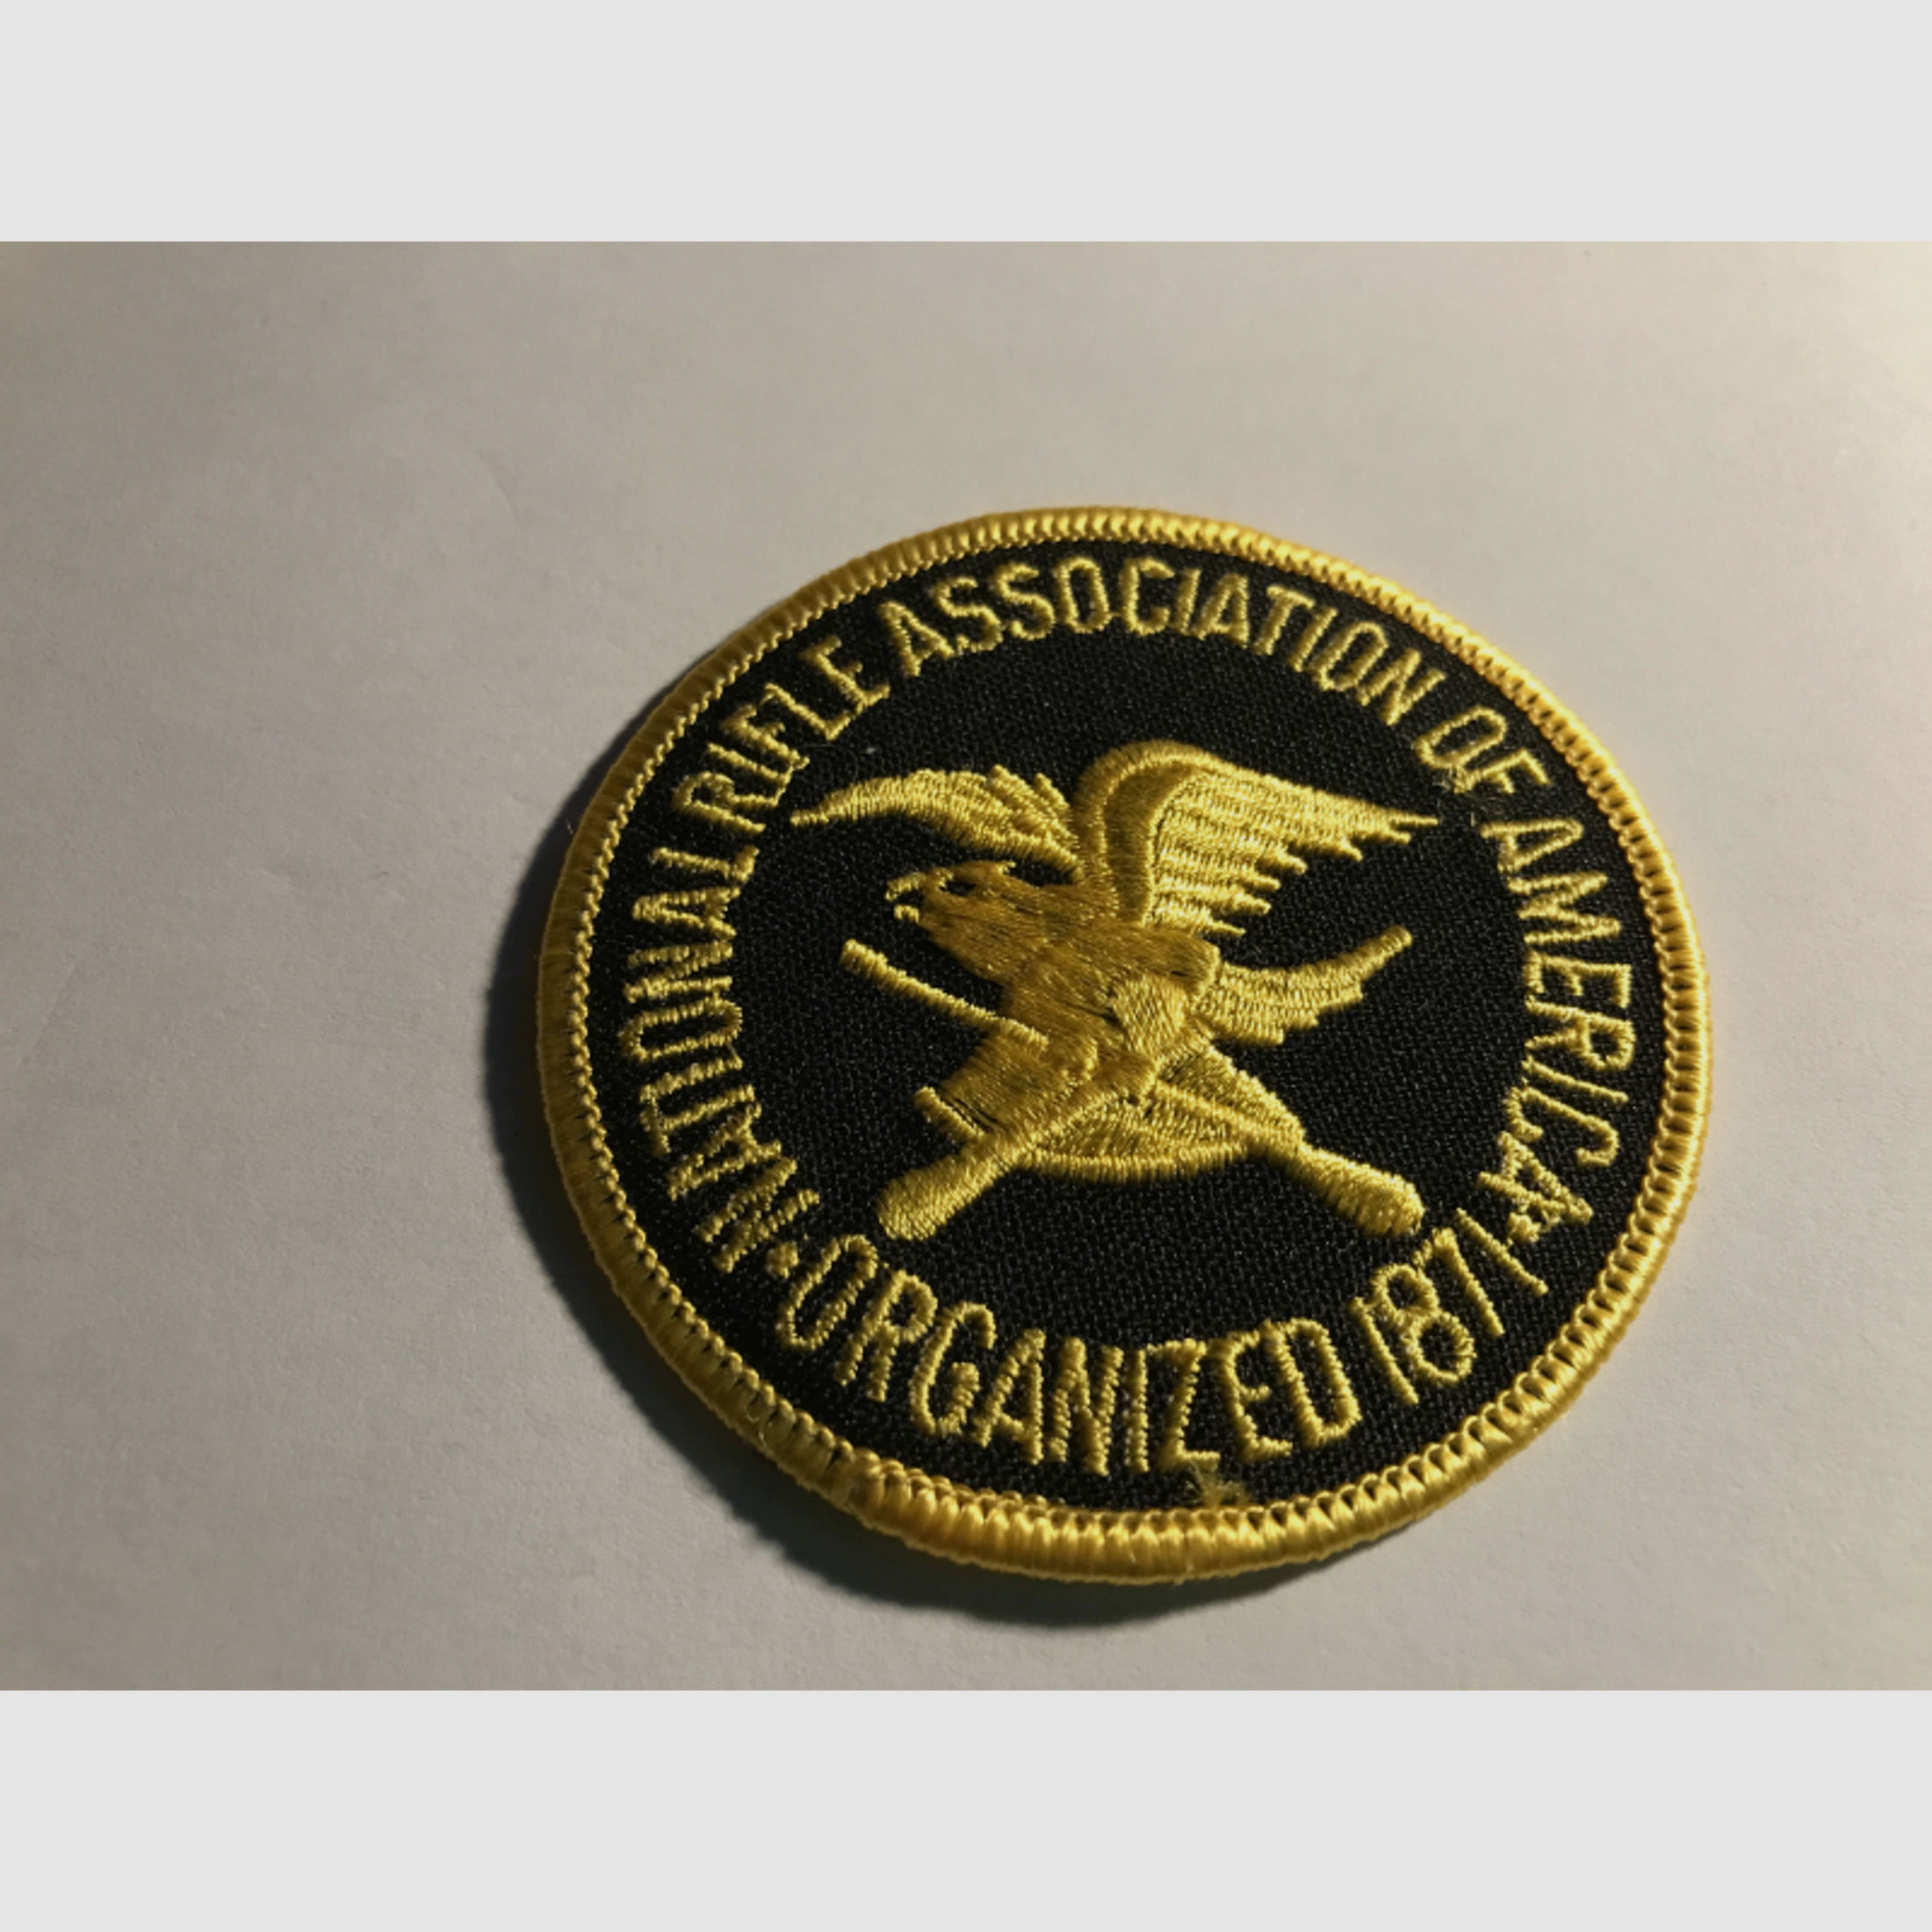 Aufnäher National Rifle Association, NRA, Golden Eagle patch